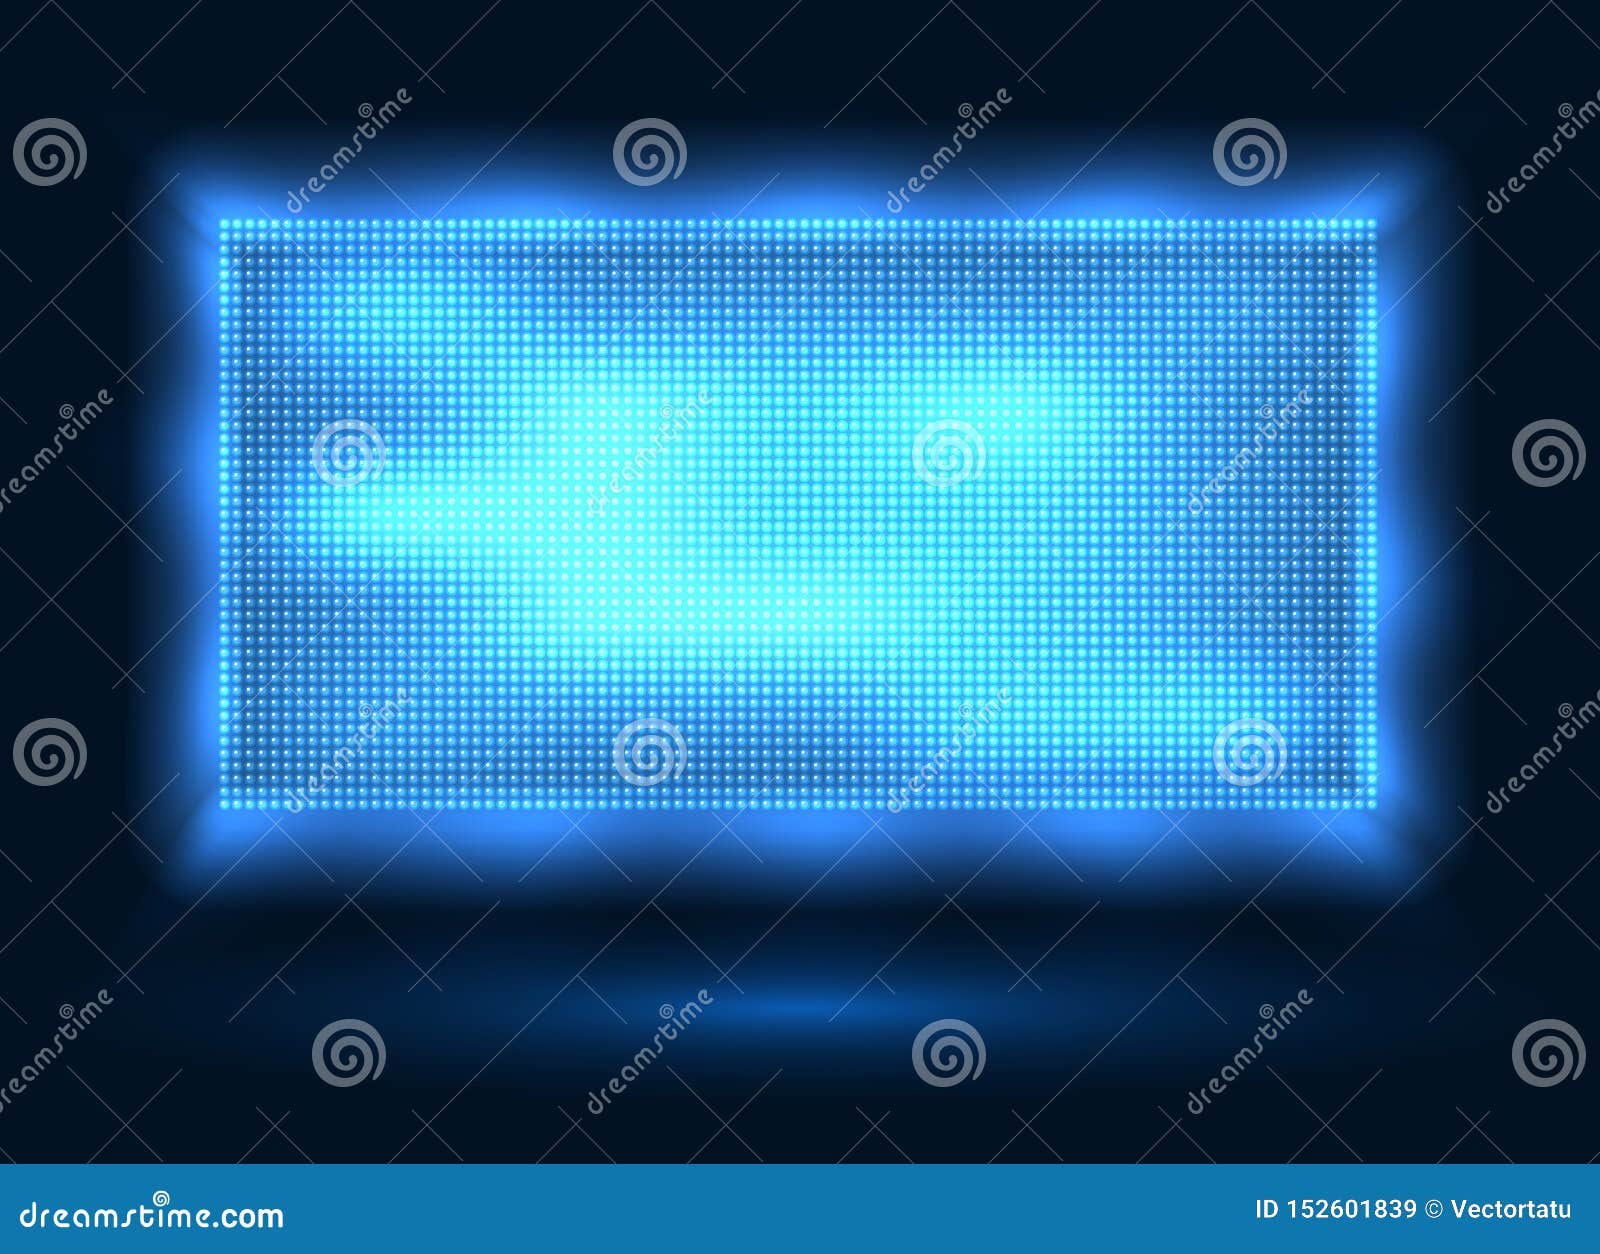 Blue led lights screen stock vector. Illustration of glow 152601839